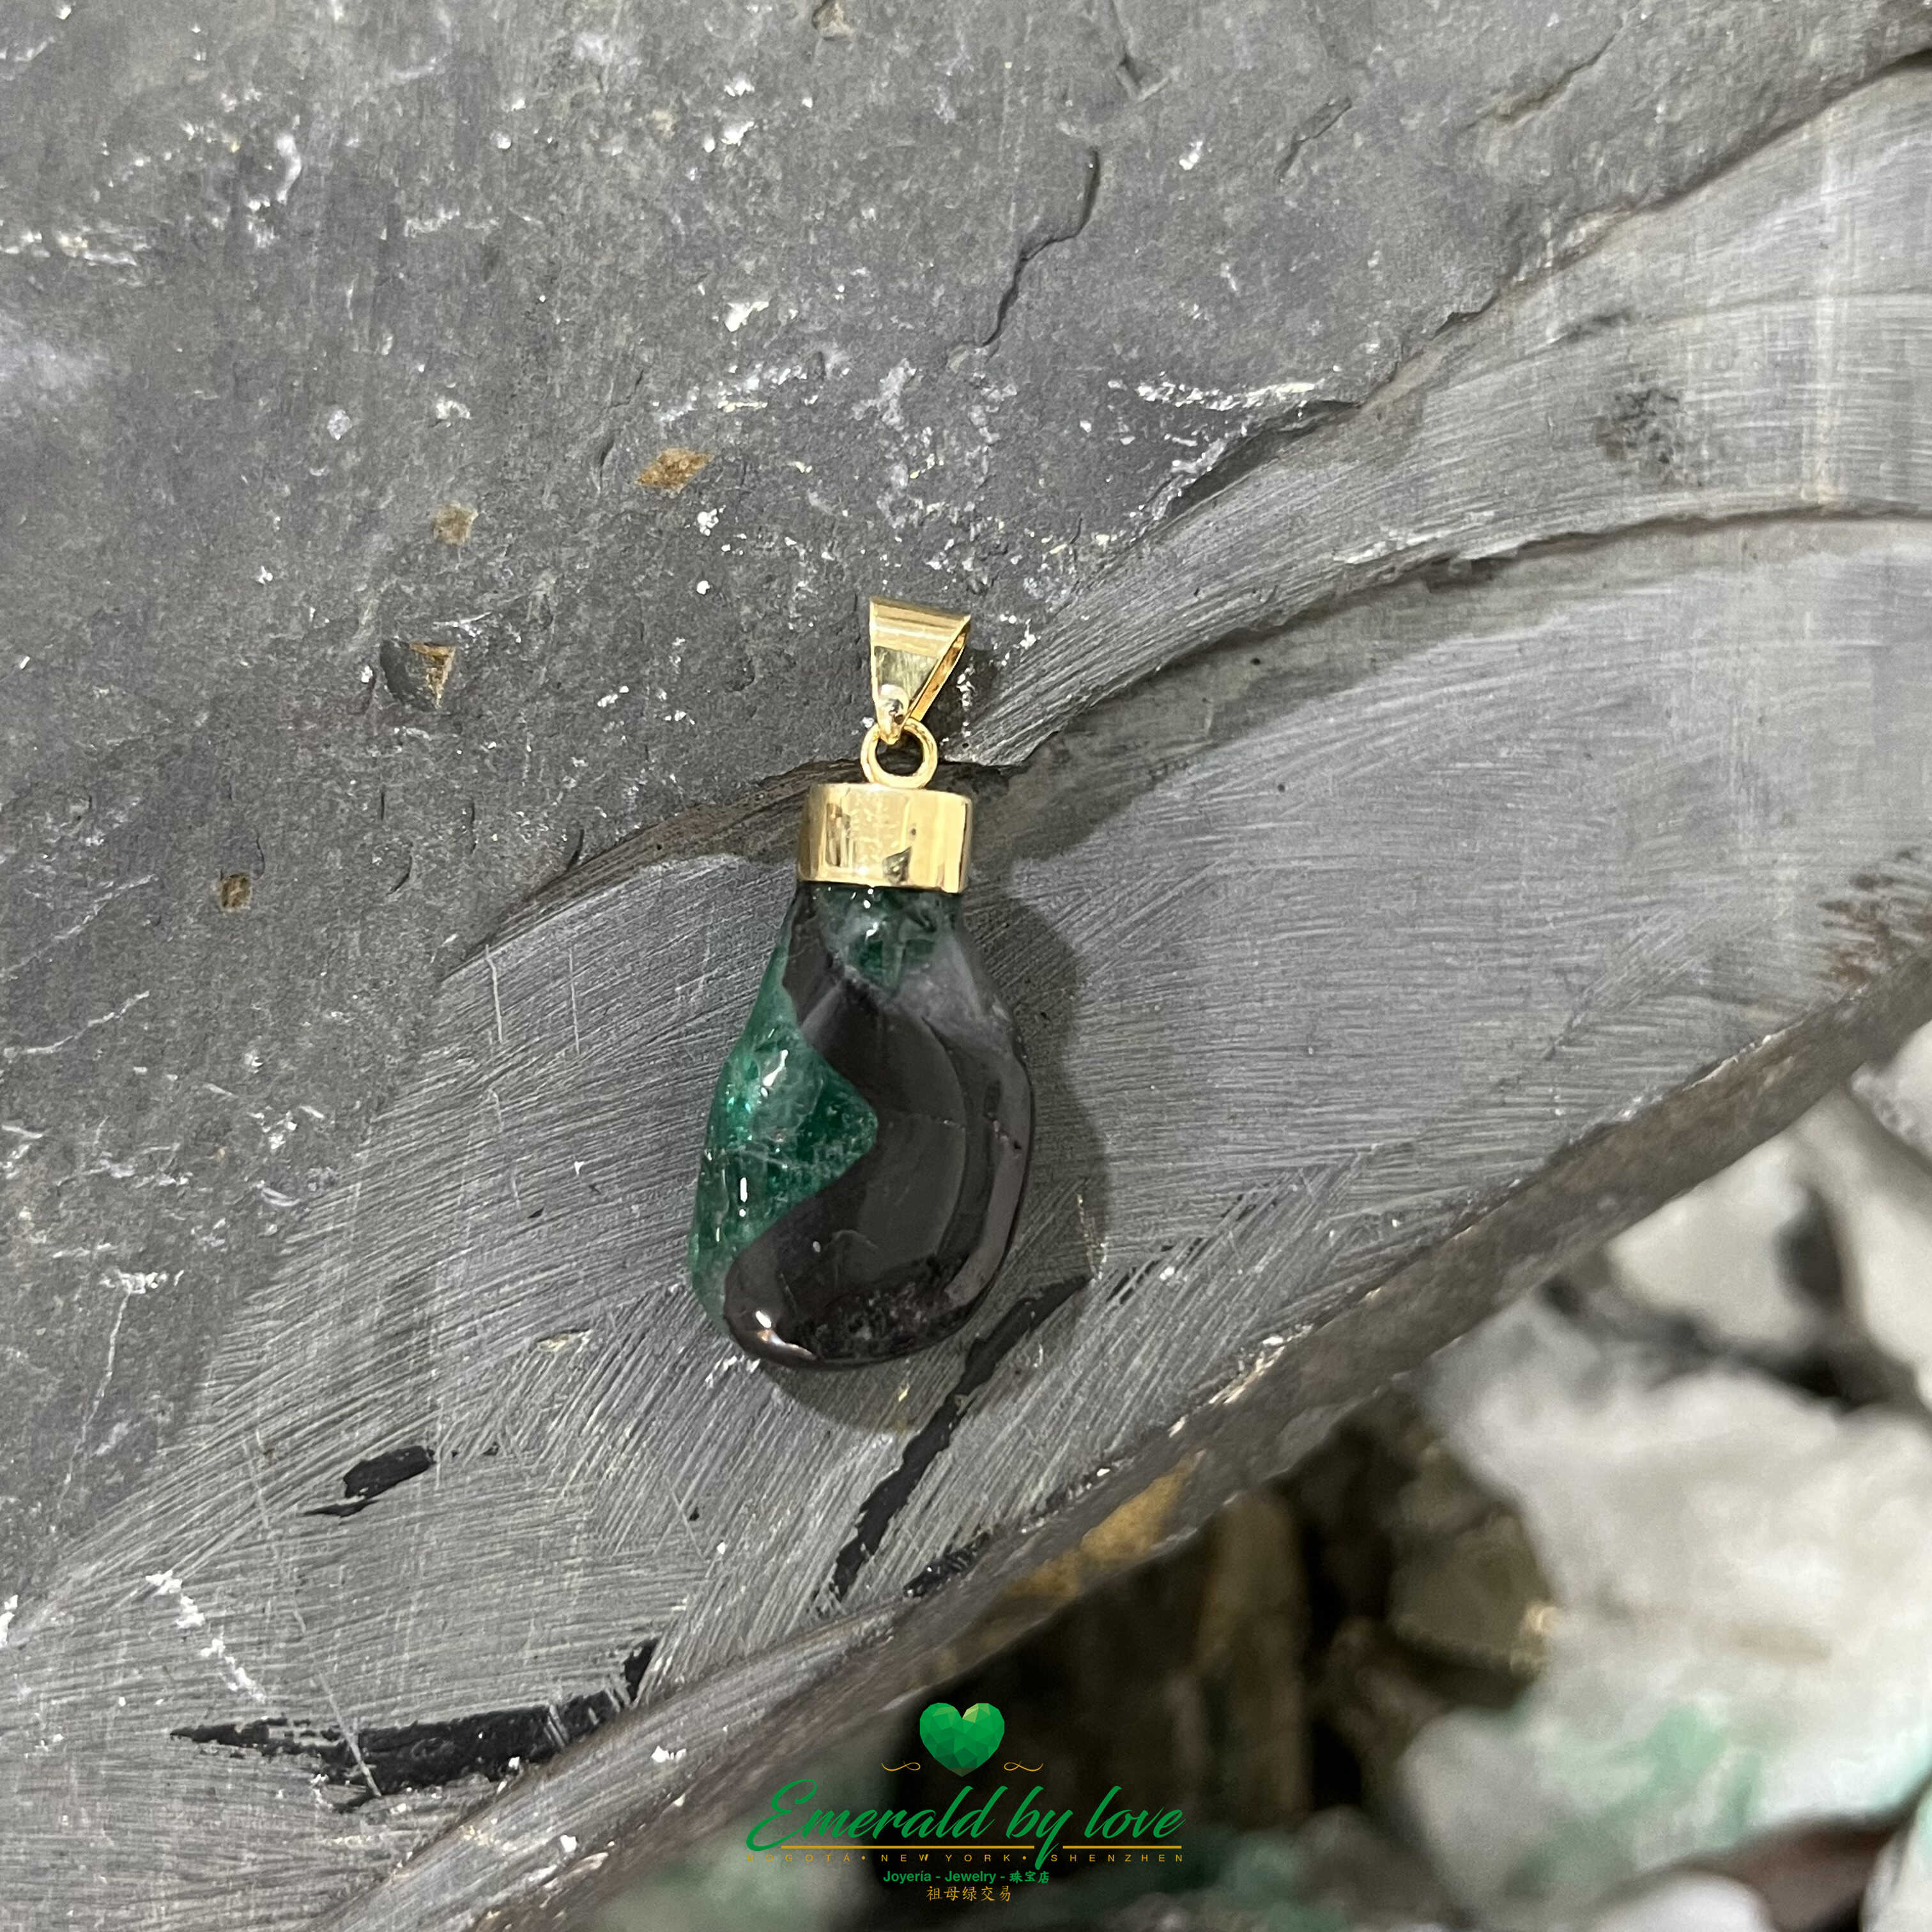 Rare Amorphous Emerald Pendant - A Captivating Wonder of Nature